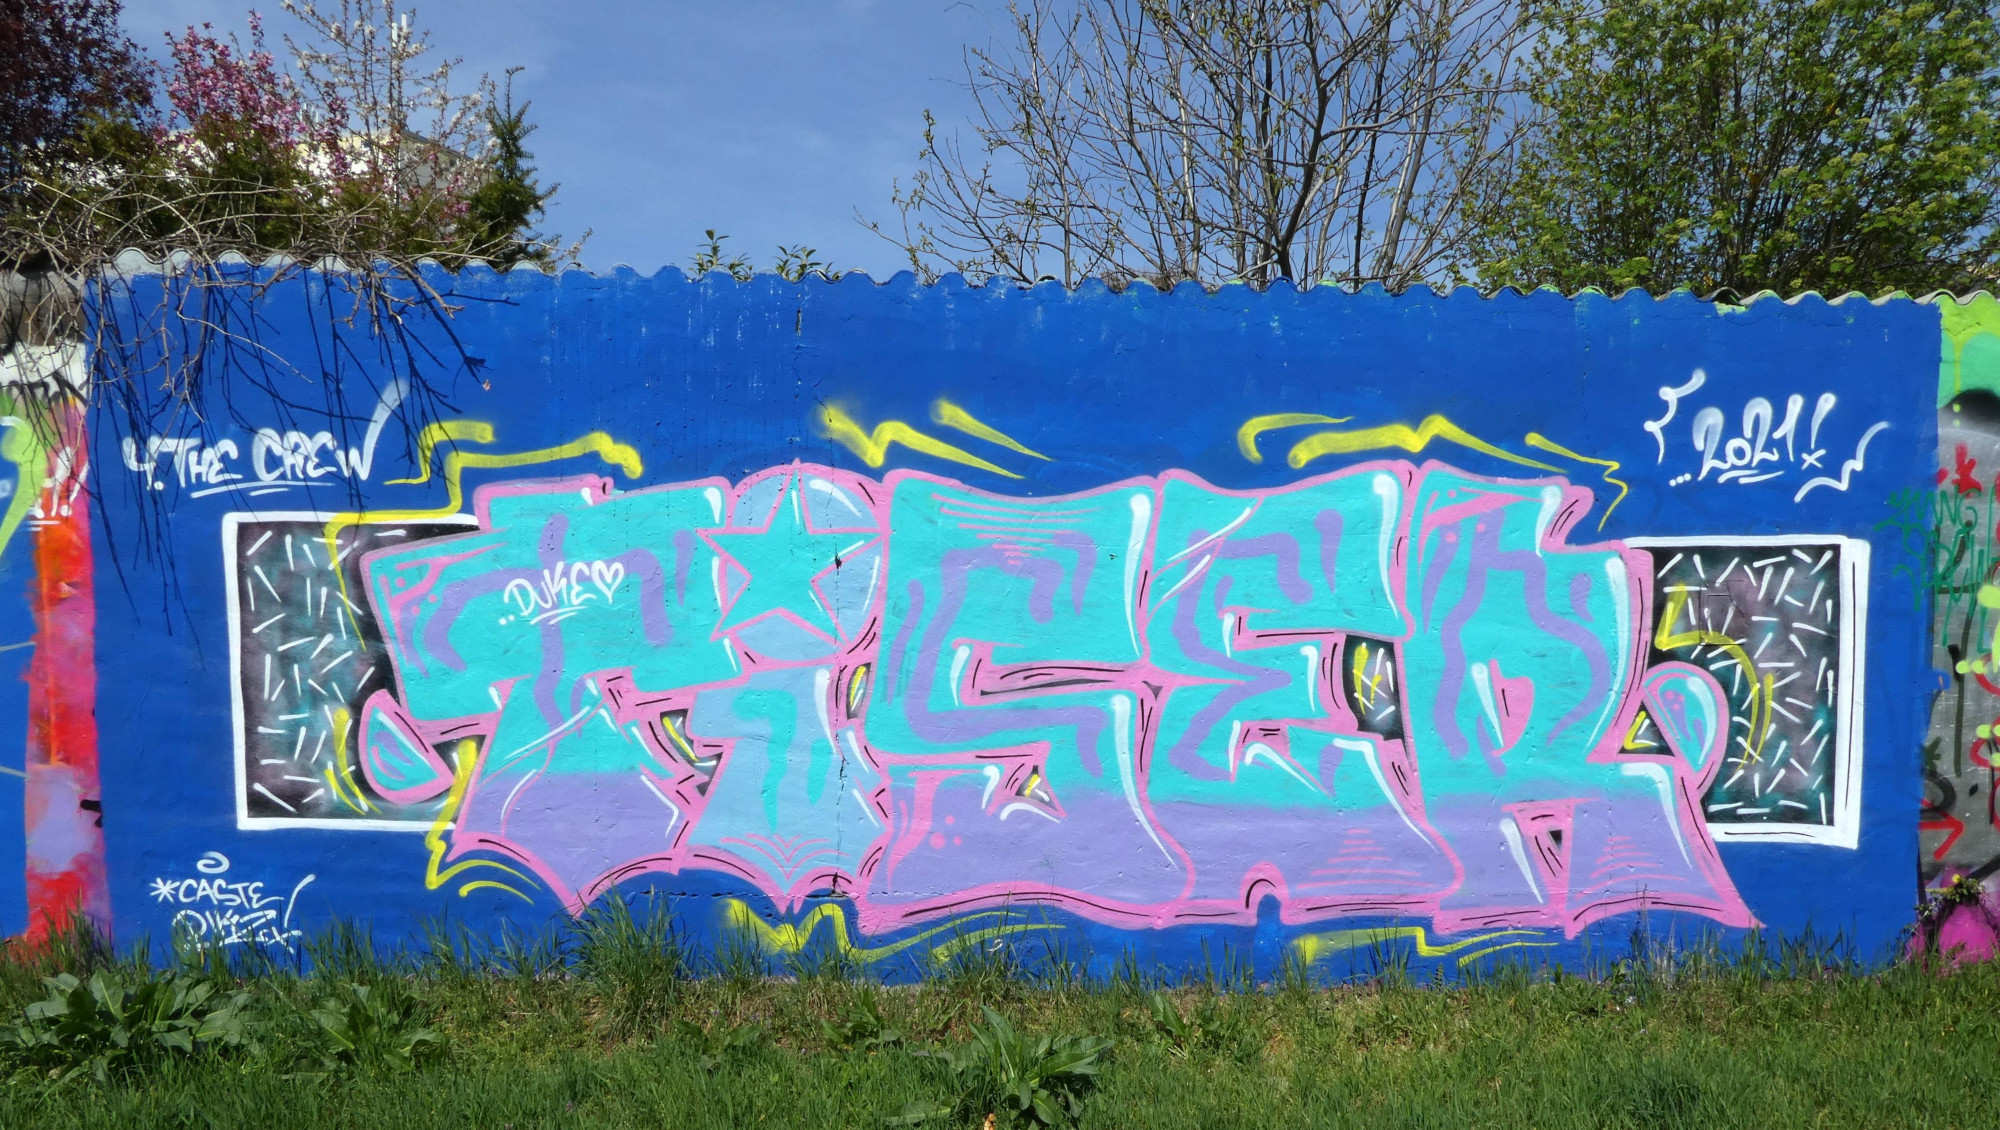 Graffiti HoF Worms 22. April 2021